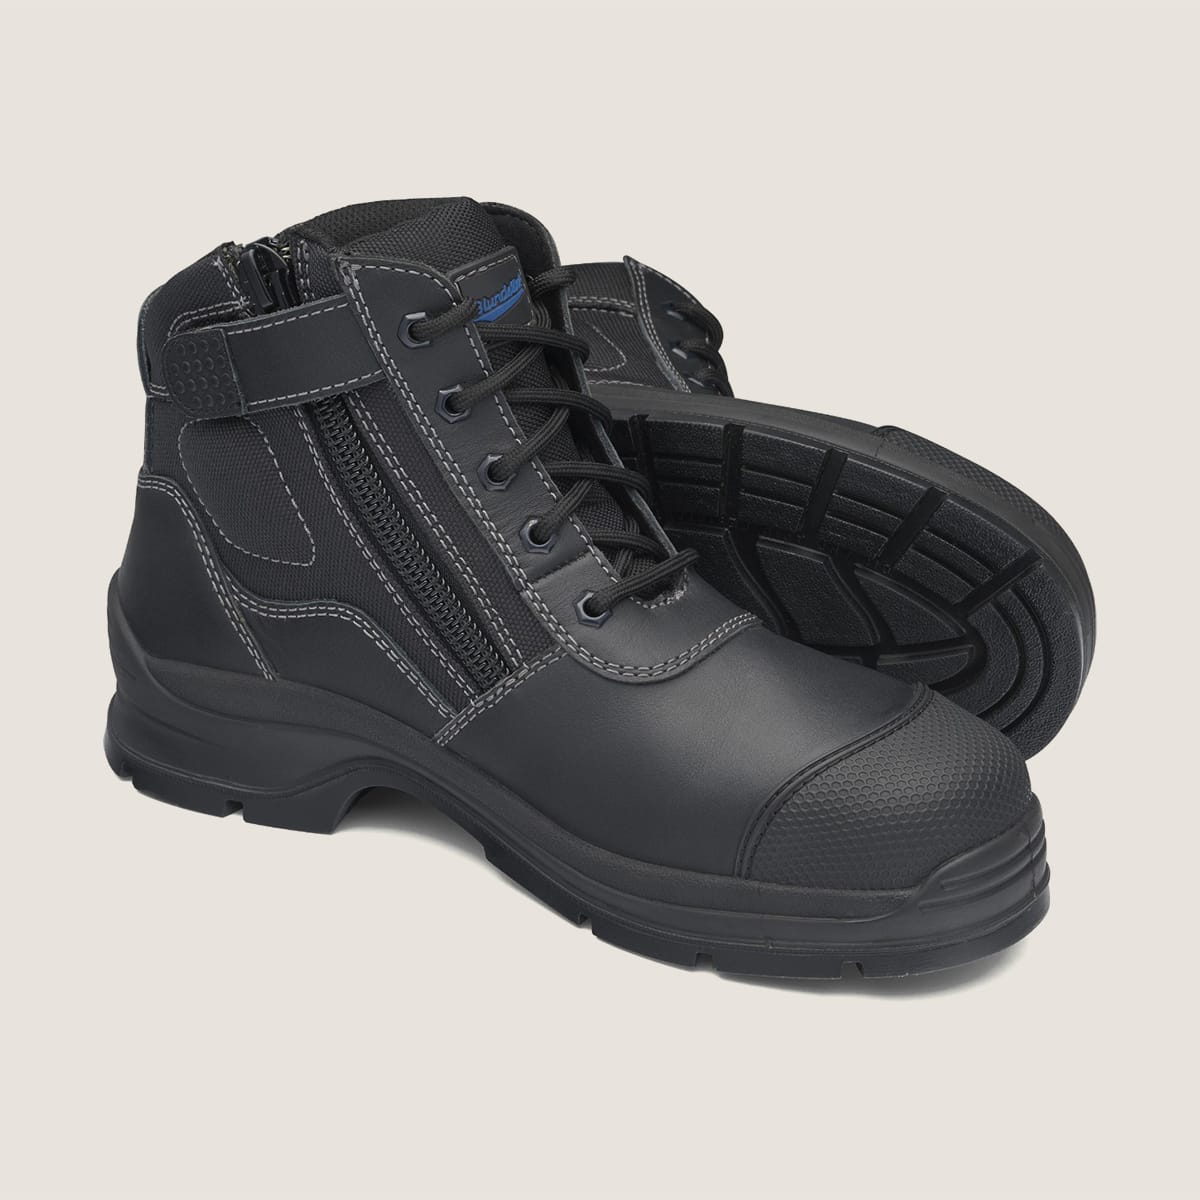 Black Steel Toe Cap Boots